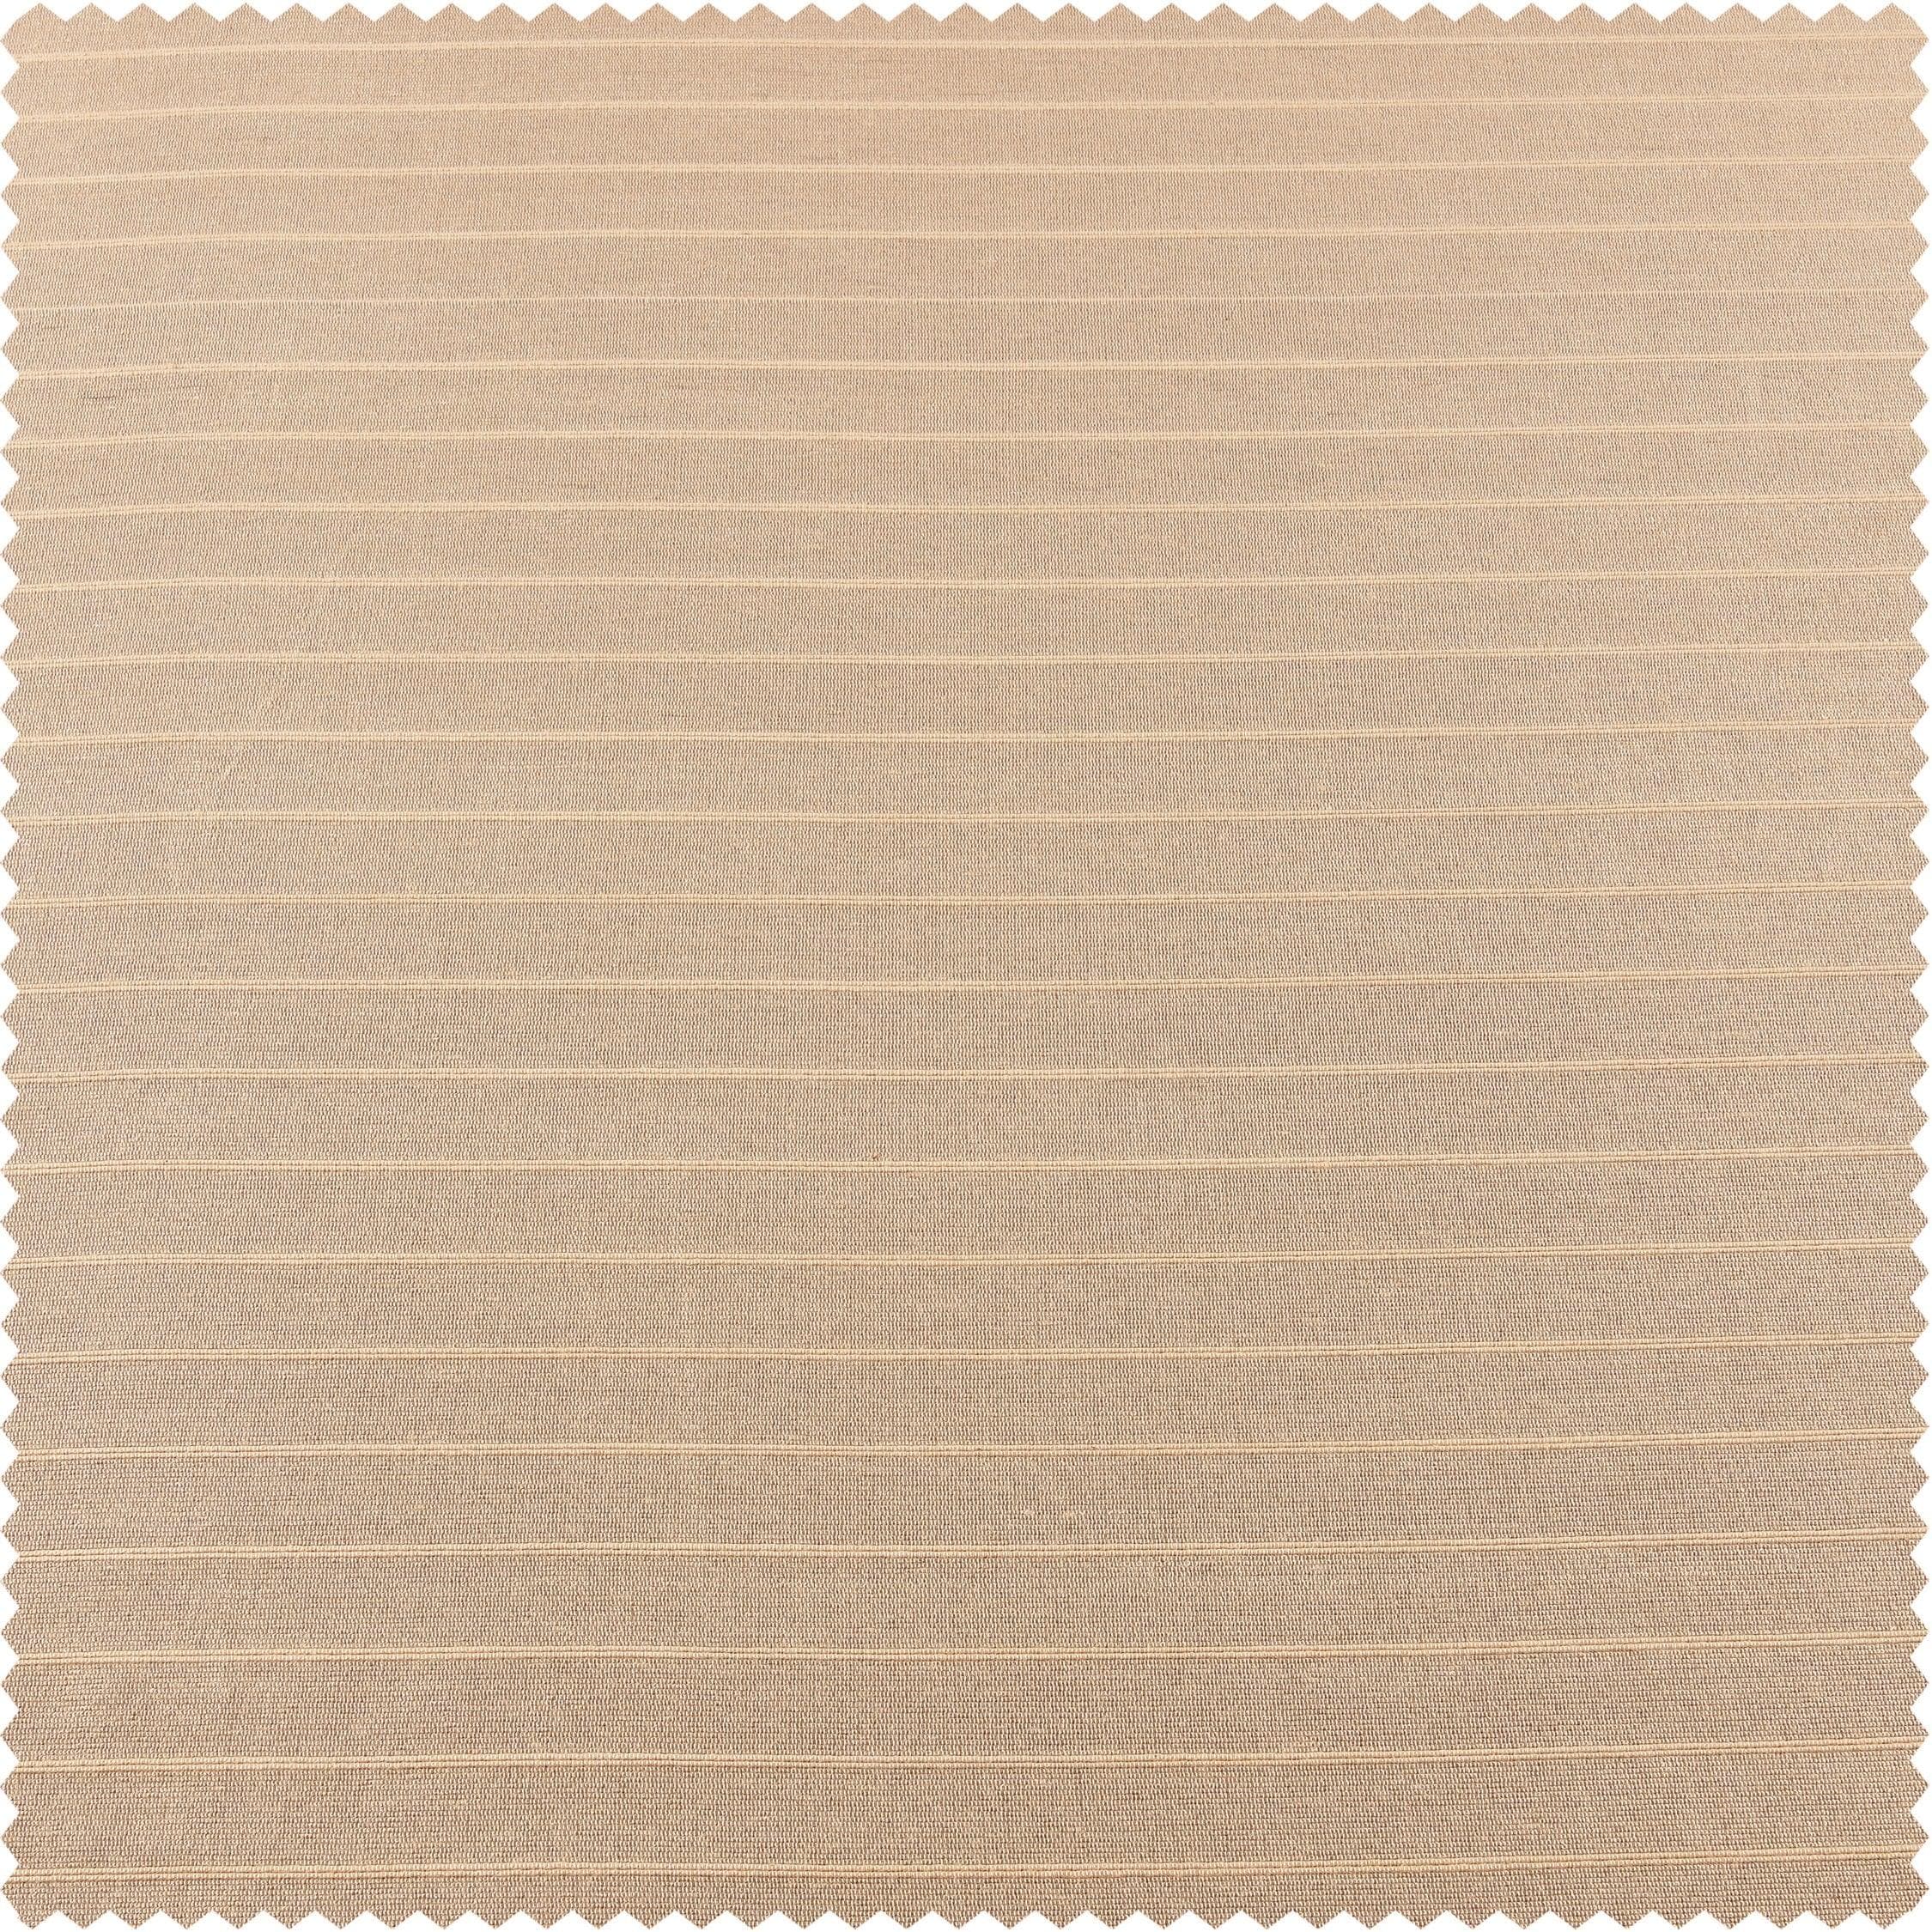 Sandcastle Tan Striped Hand Weaved Cotton Custom Curtain